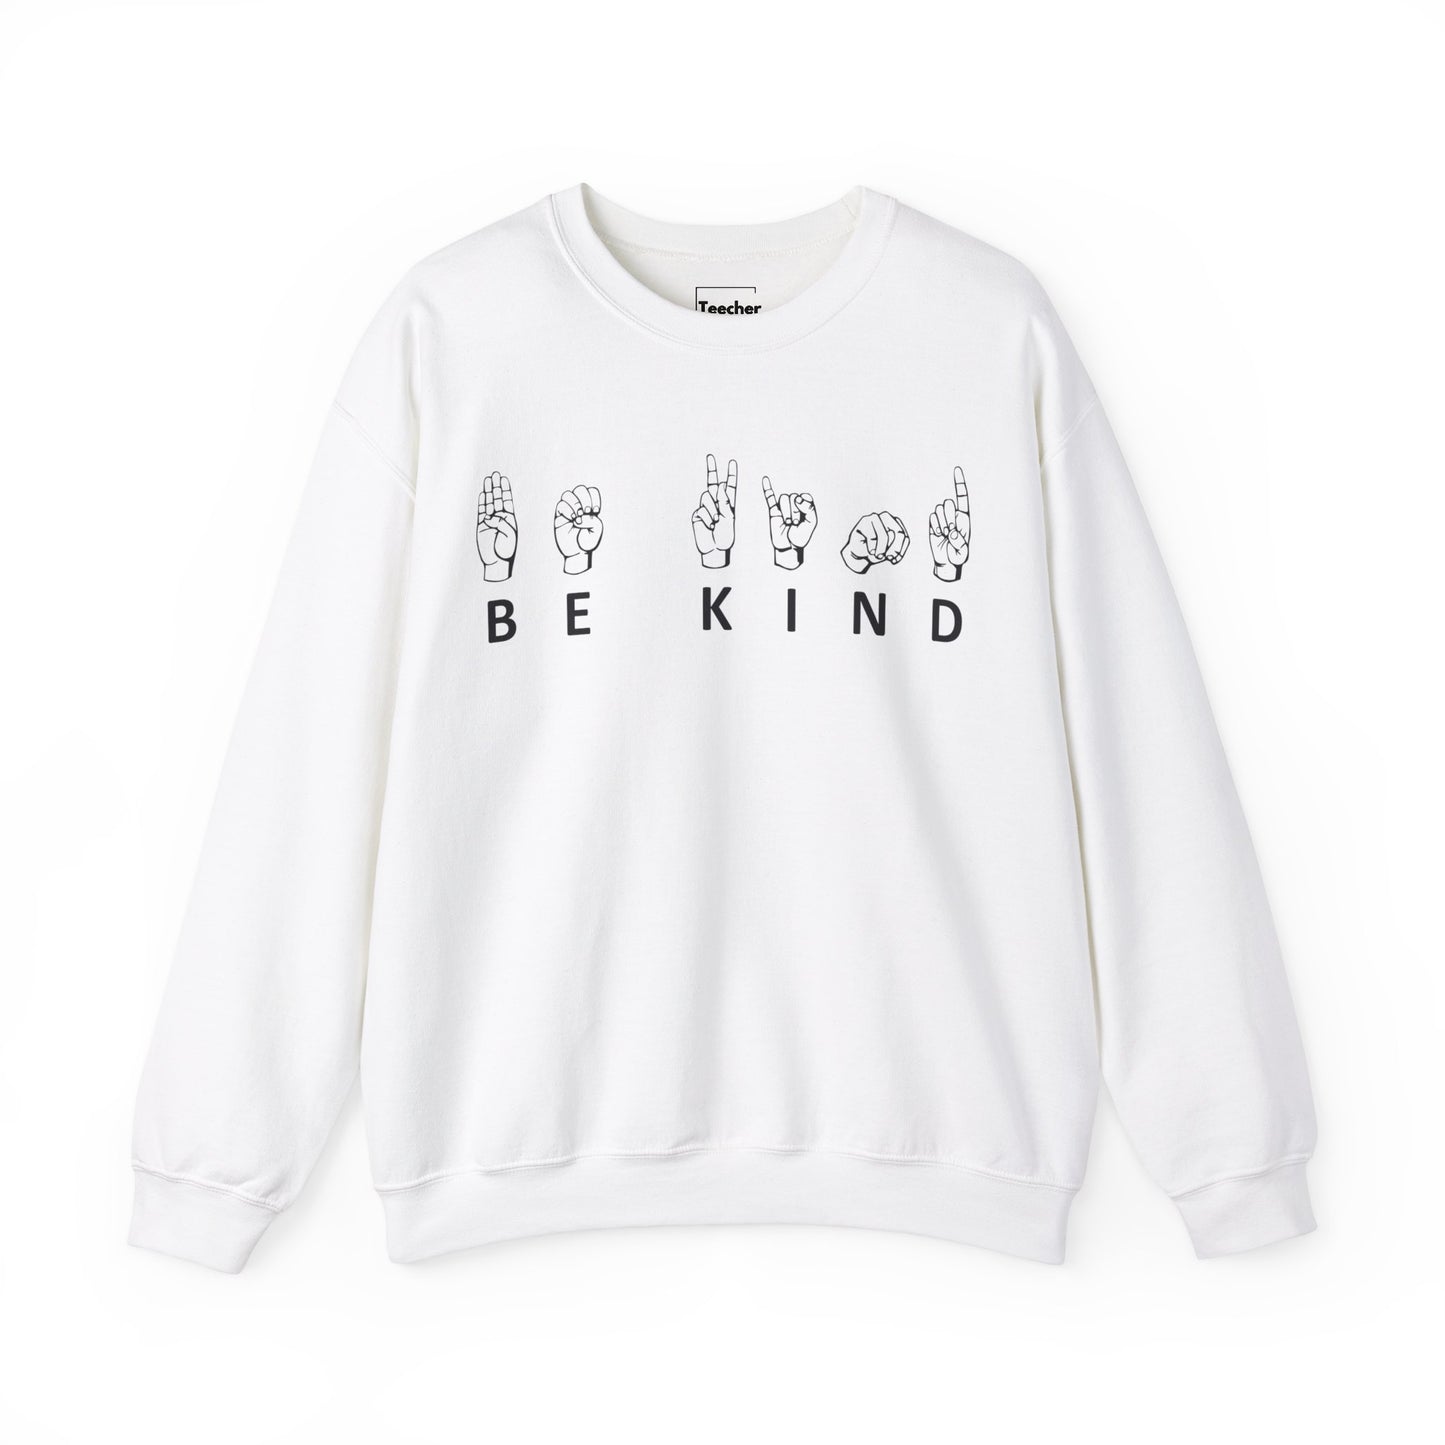 Be Kind Sign Language Sweatshirt